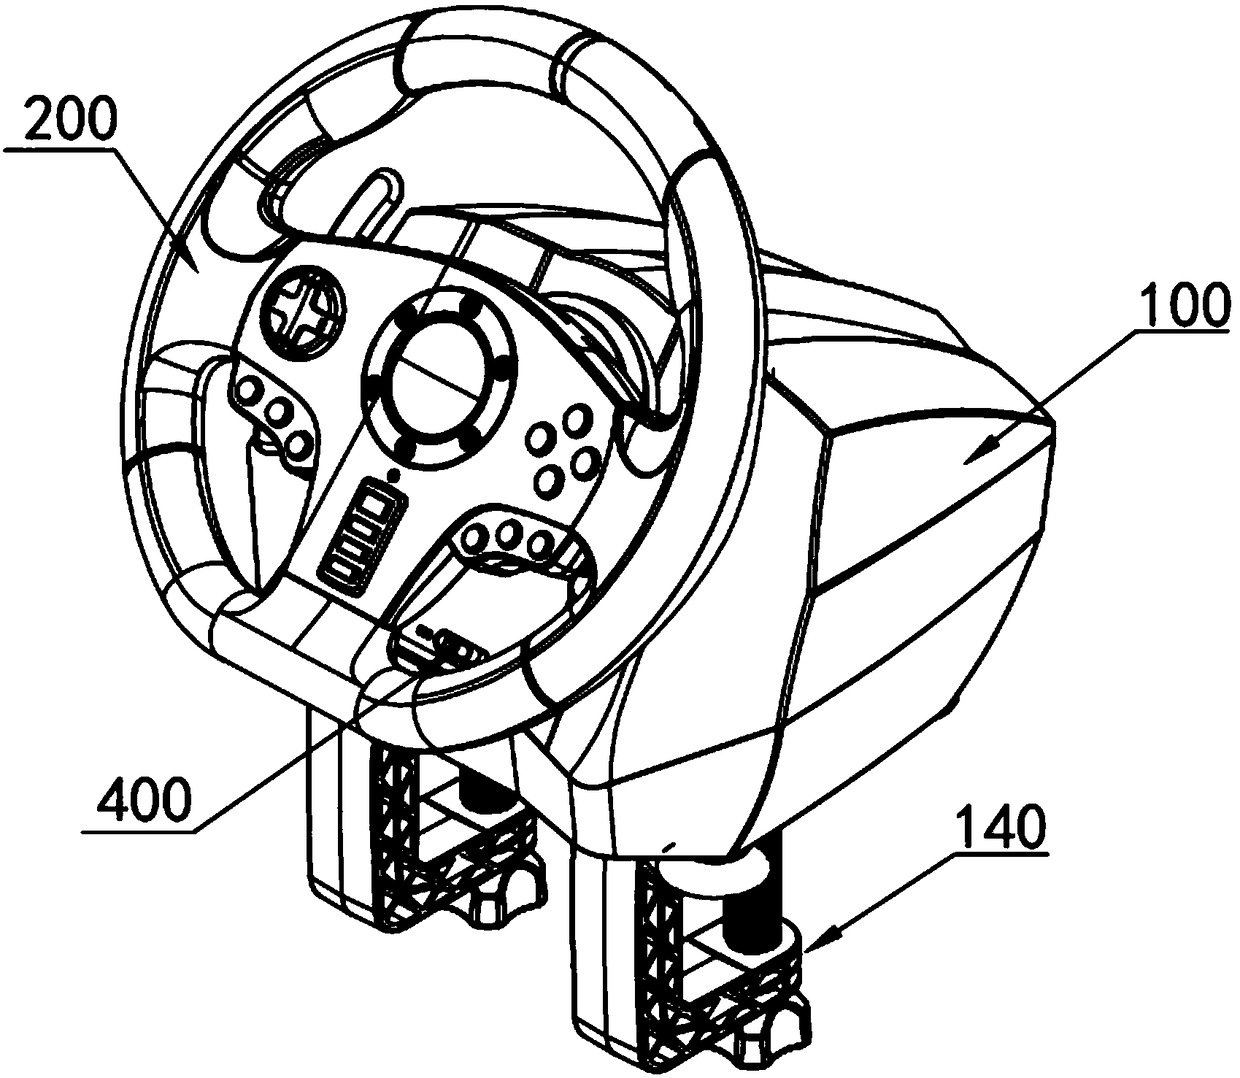 Multi-gear adjustable simulated game steering wheel